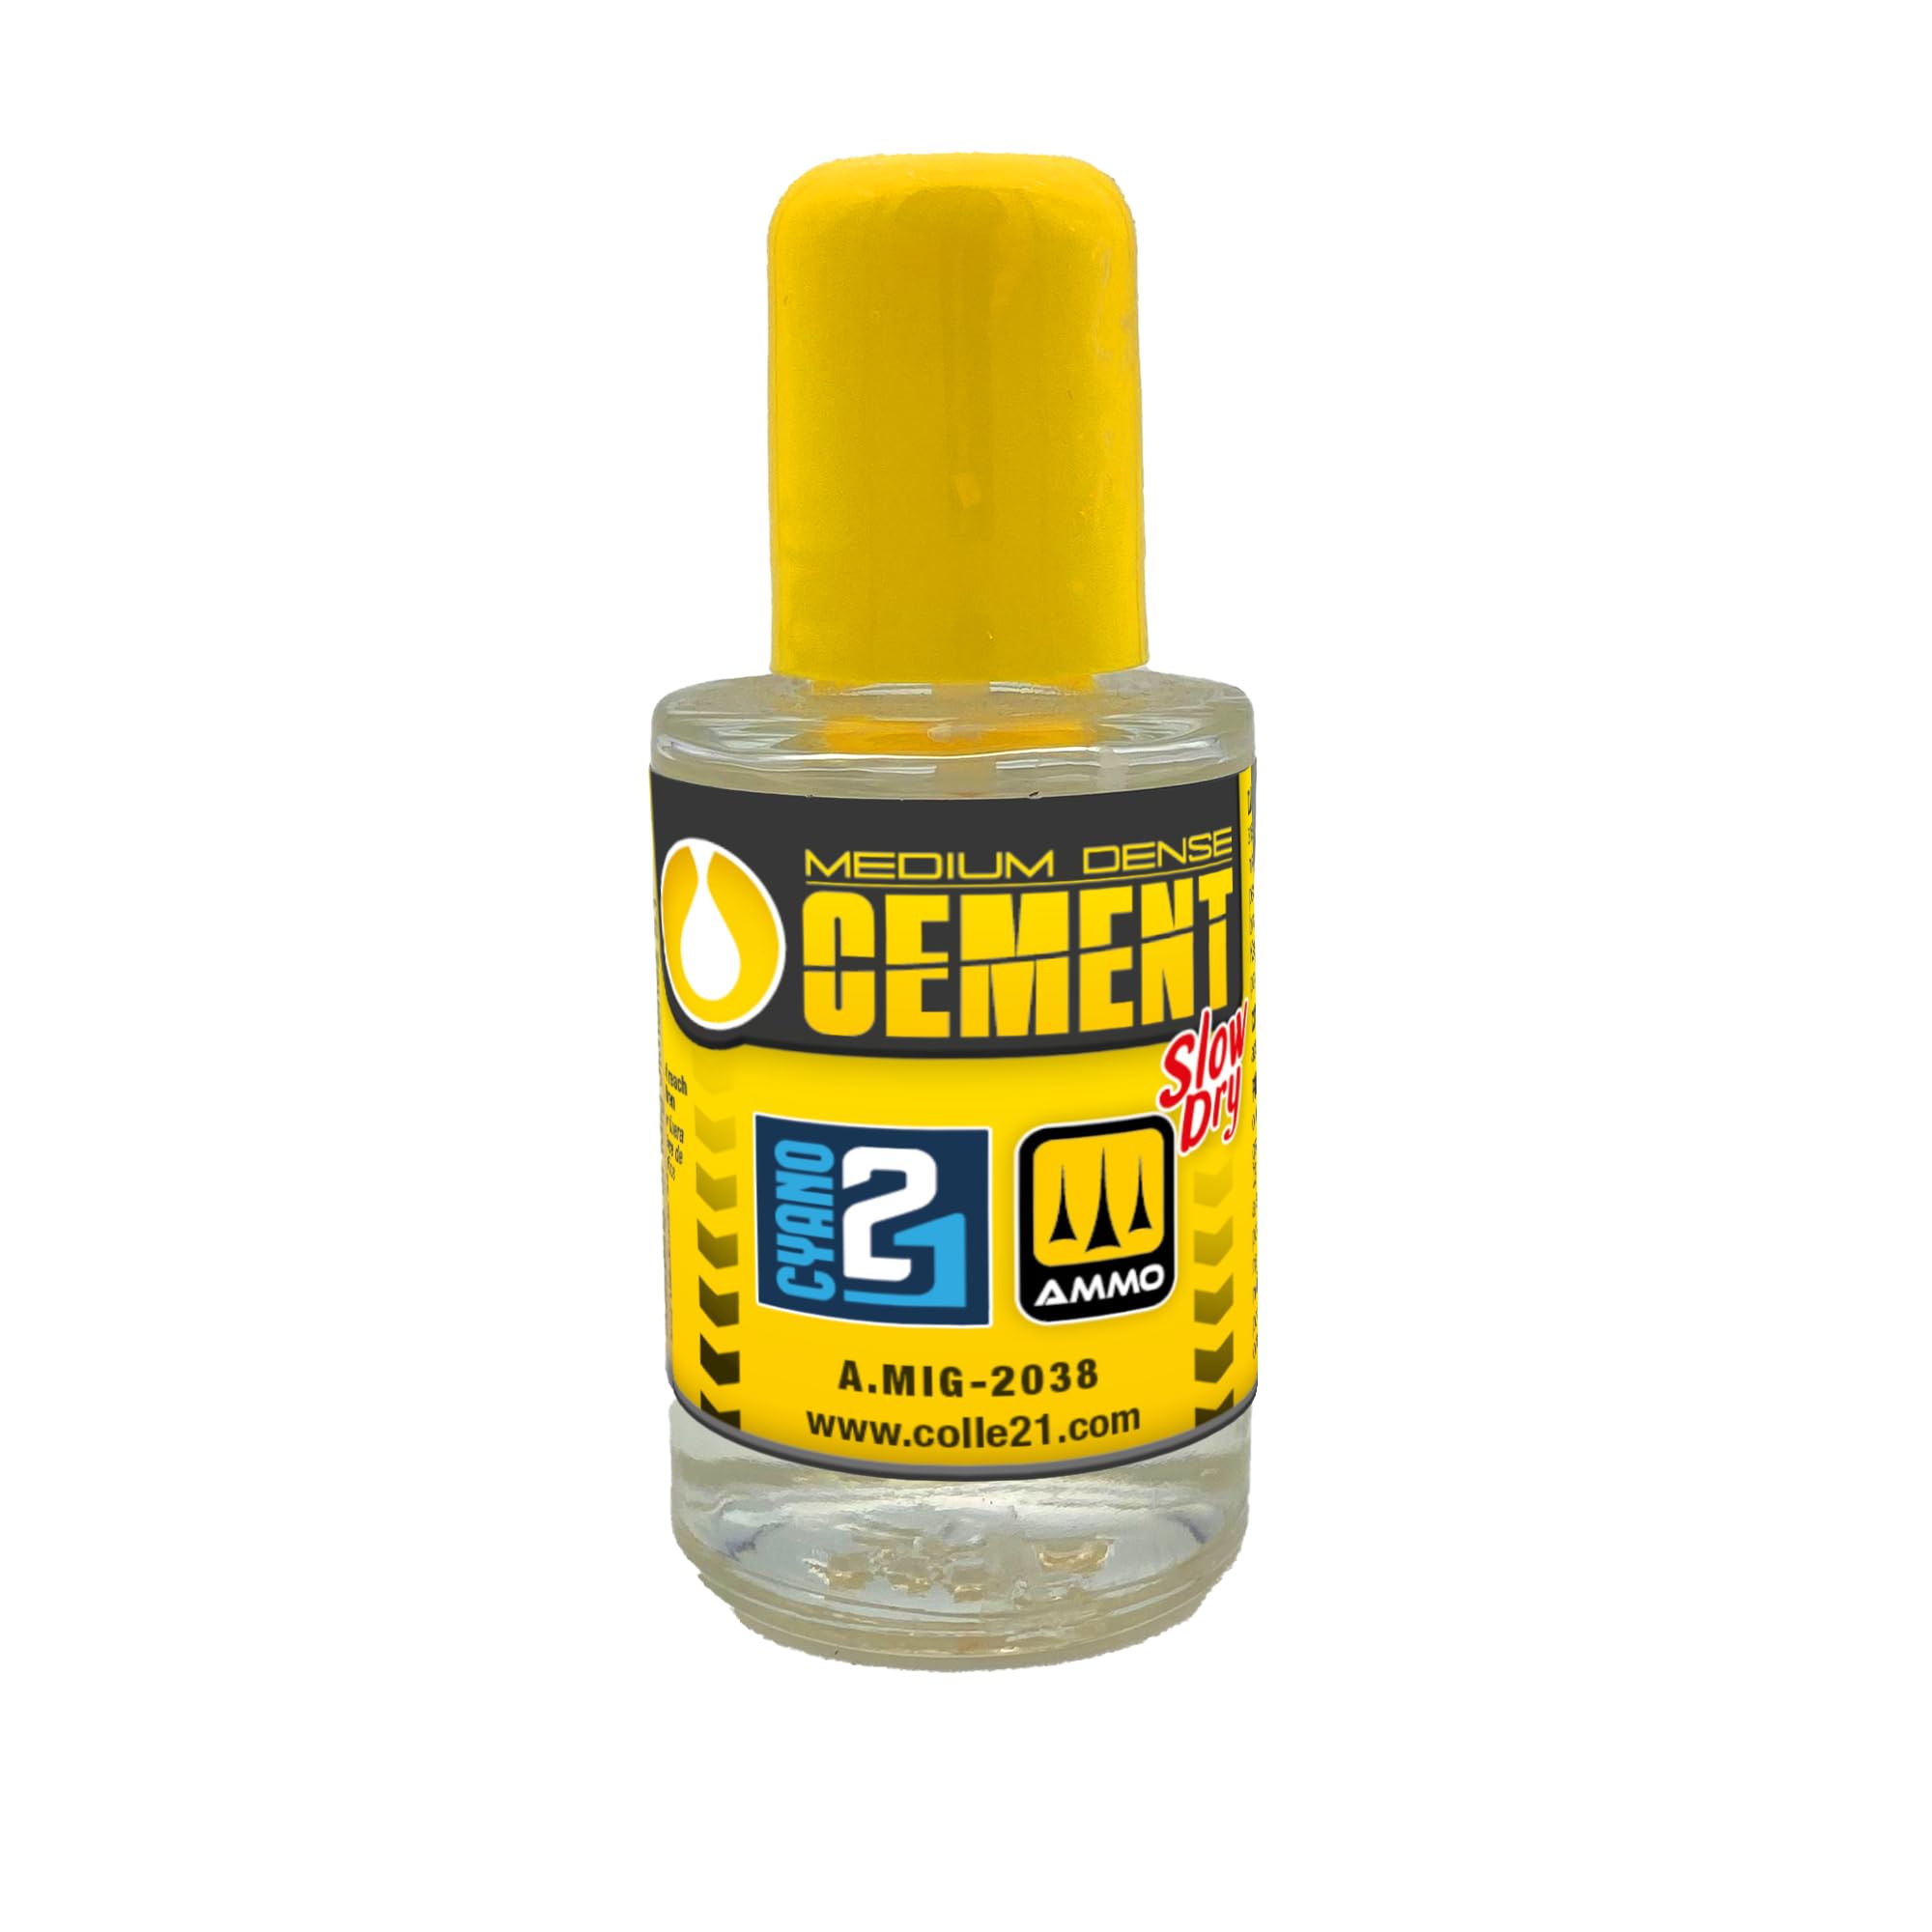 Glue MEDIUM DENSE CEMENT - SLOW DRY (polyester plastic glue)